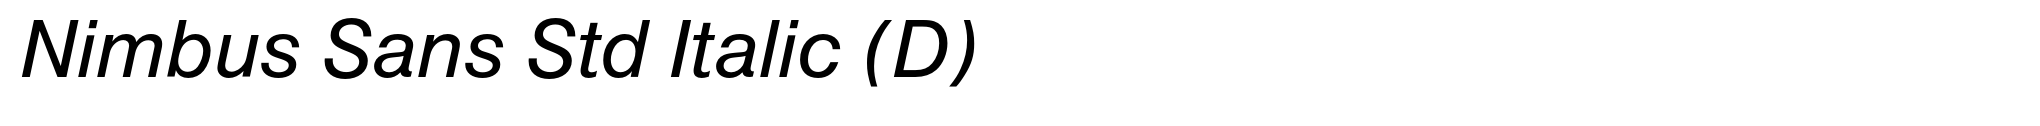 Nimbus Sans Std Italic (D) image